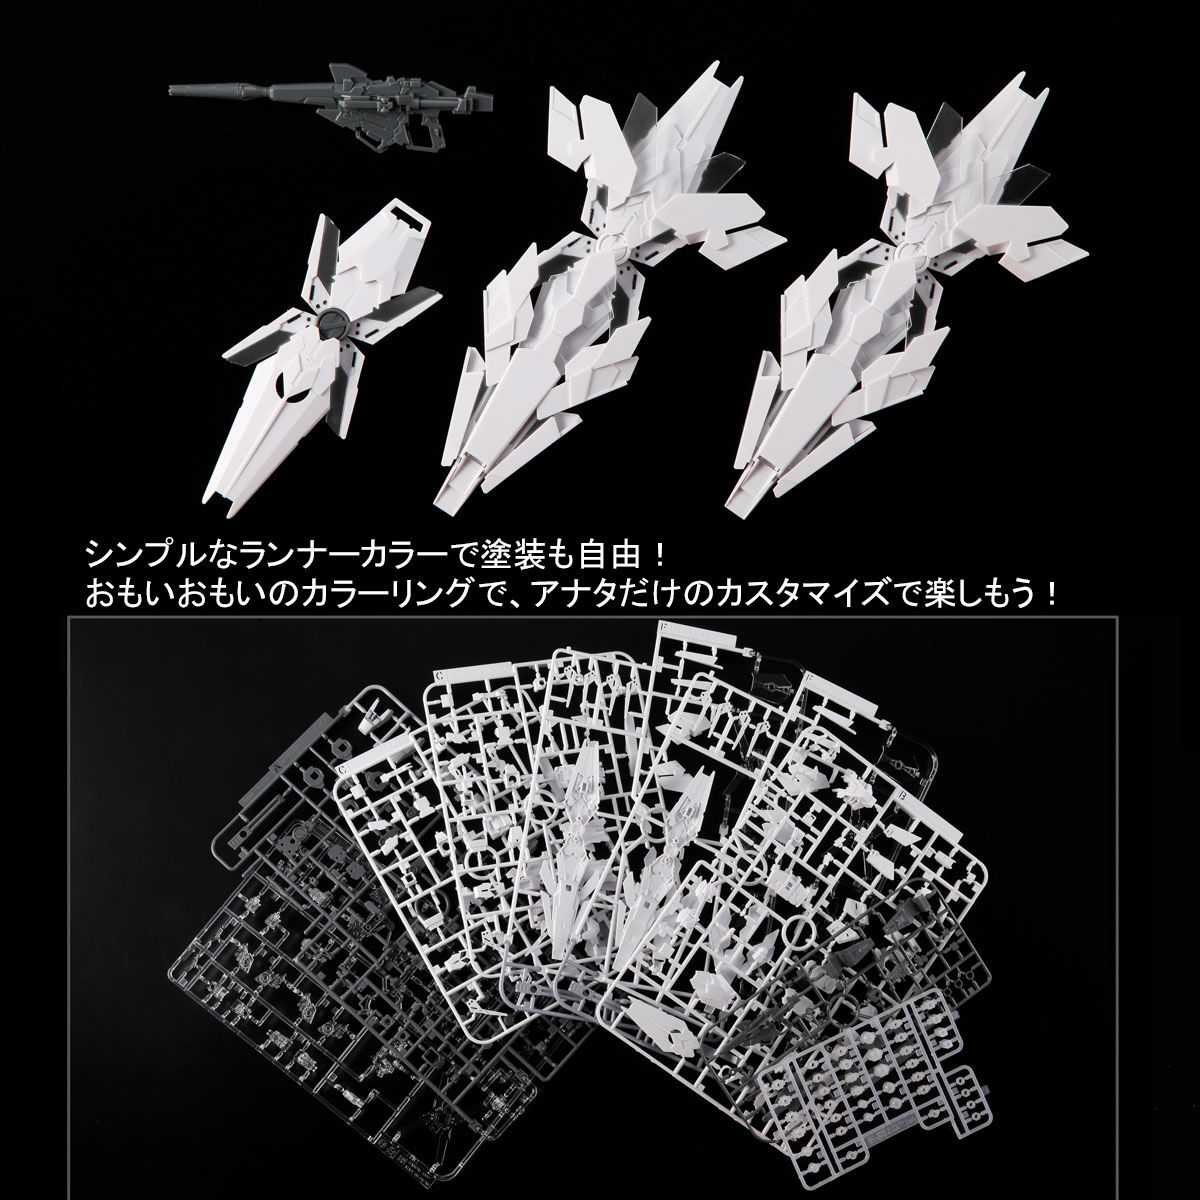 HGUC 1/144 RX-0 Unicorn Gundam[Destroy Mode](Painting Model)